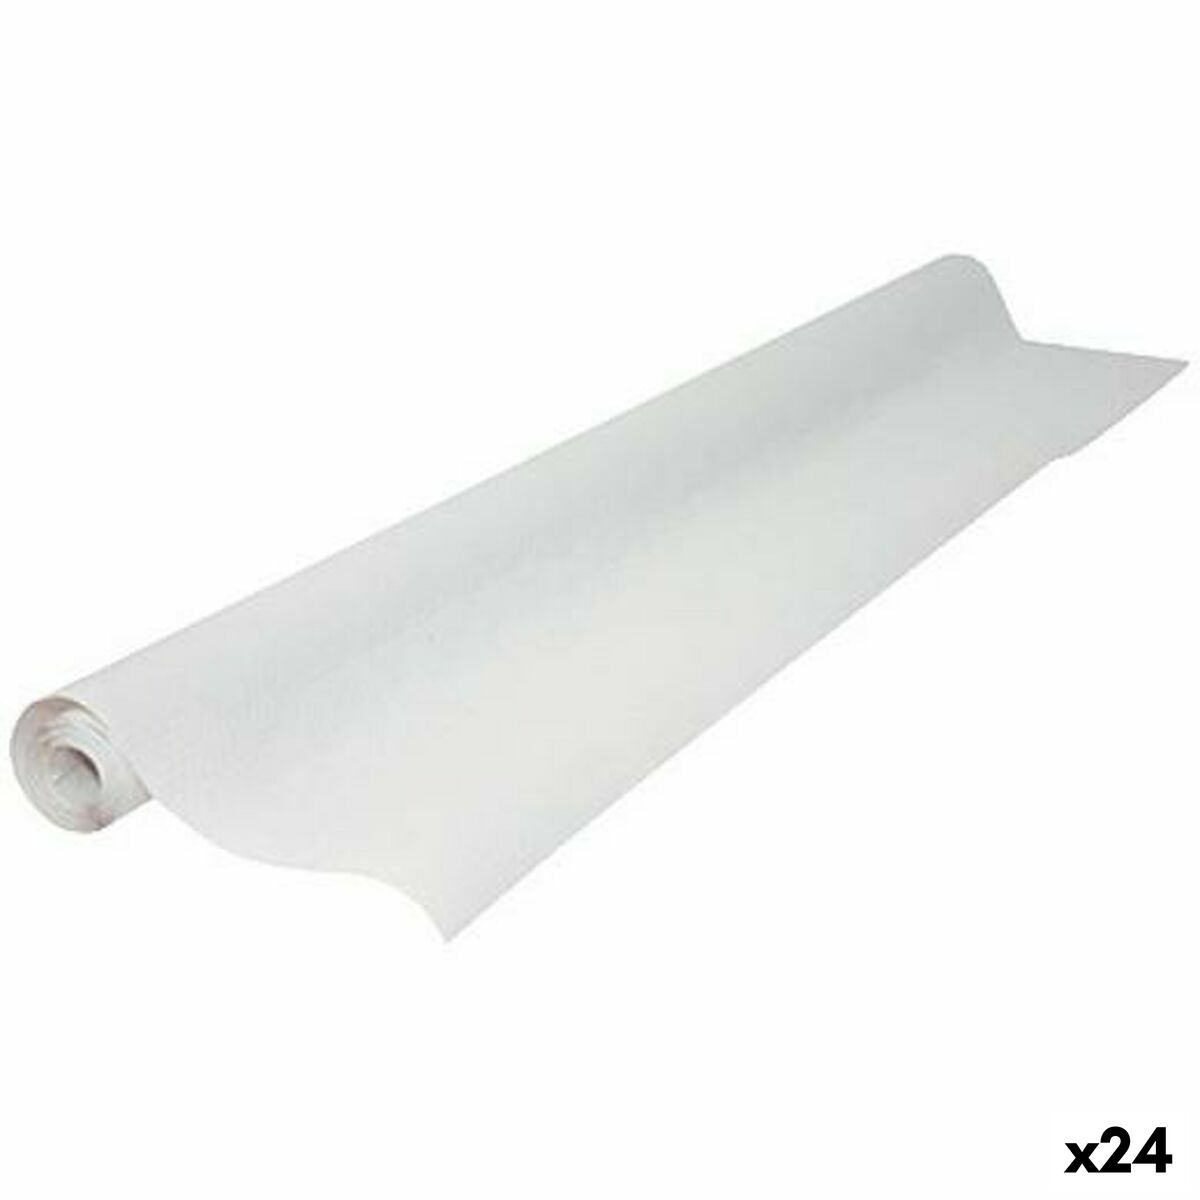 Tischdecke Maxi Products 1 x 10 m Papier Weiß 24 Stück 40 Stück